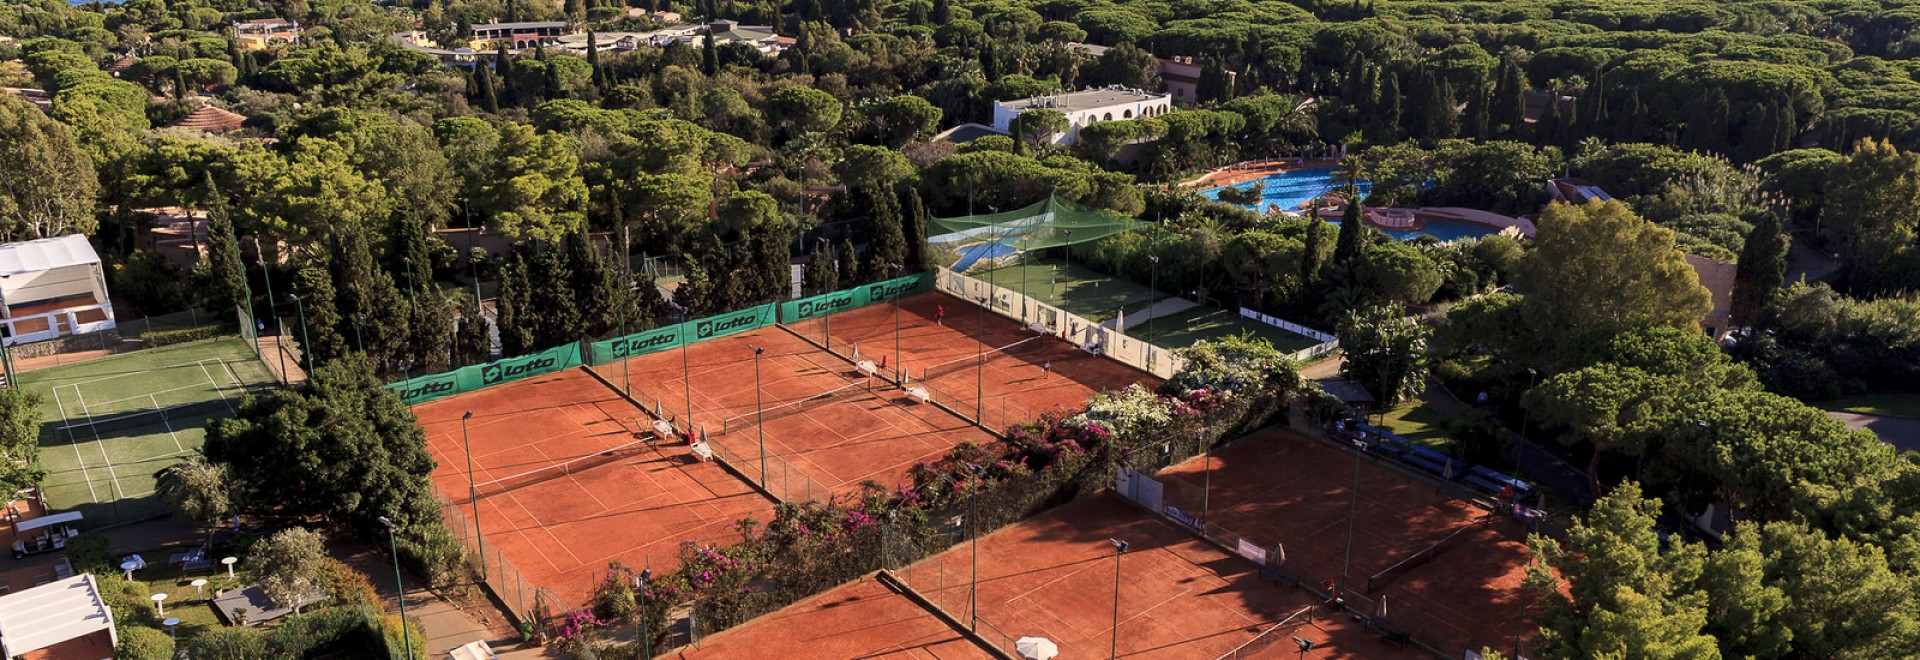 10-Hour Adult Tennis Academy - World Tennis Travel